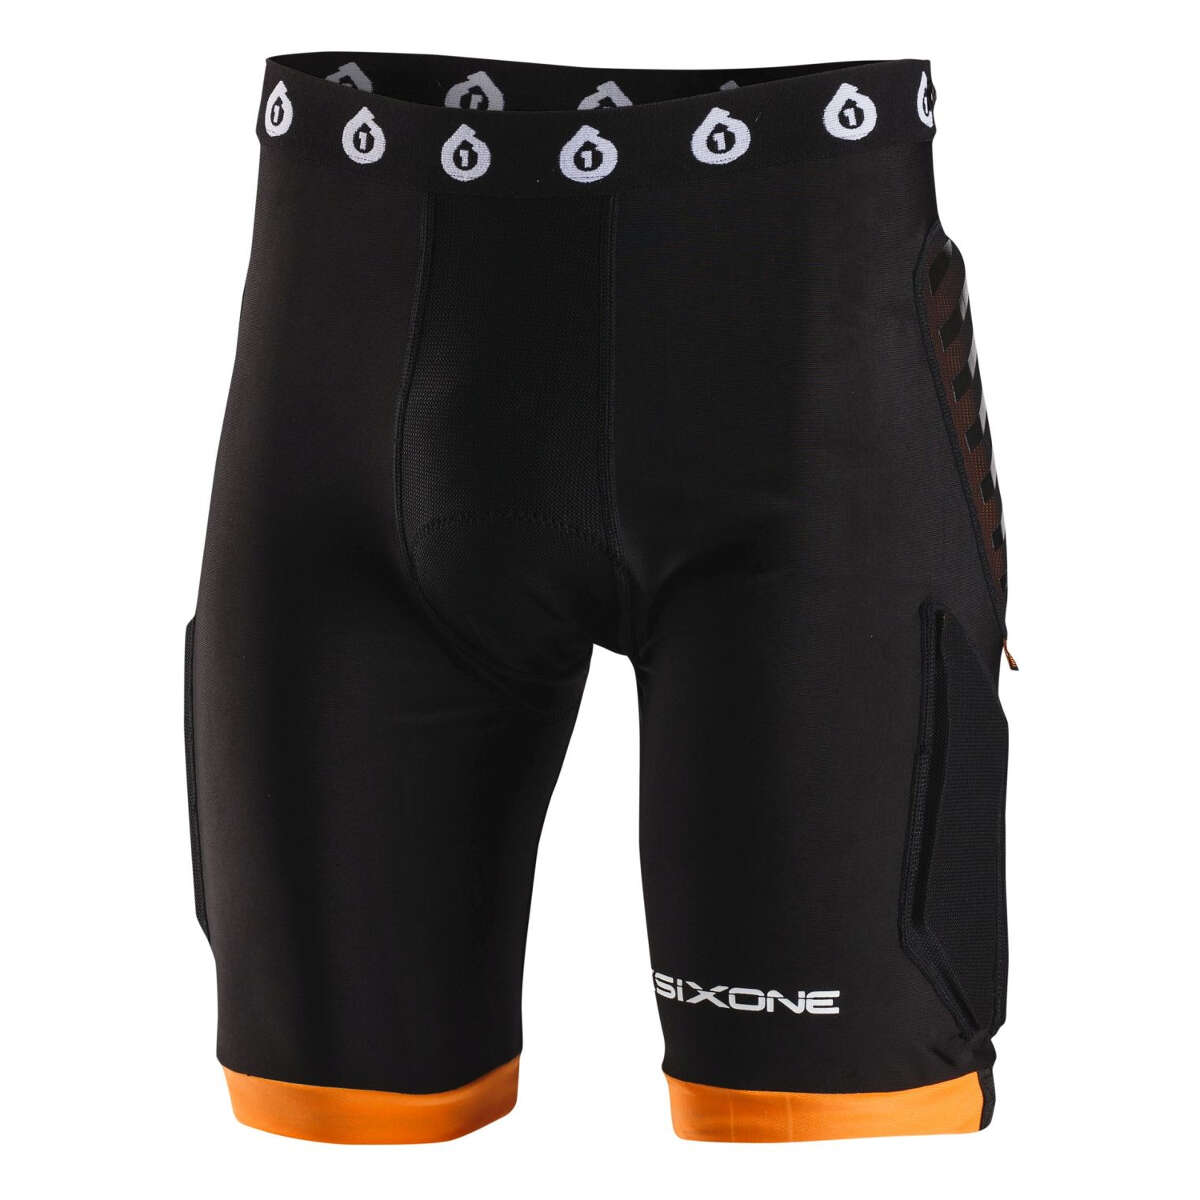 SixSixOne Protector Shorts EVO Compression Black